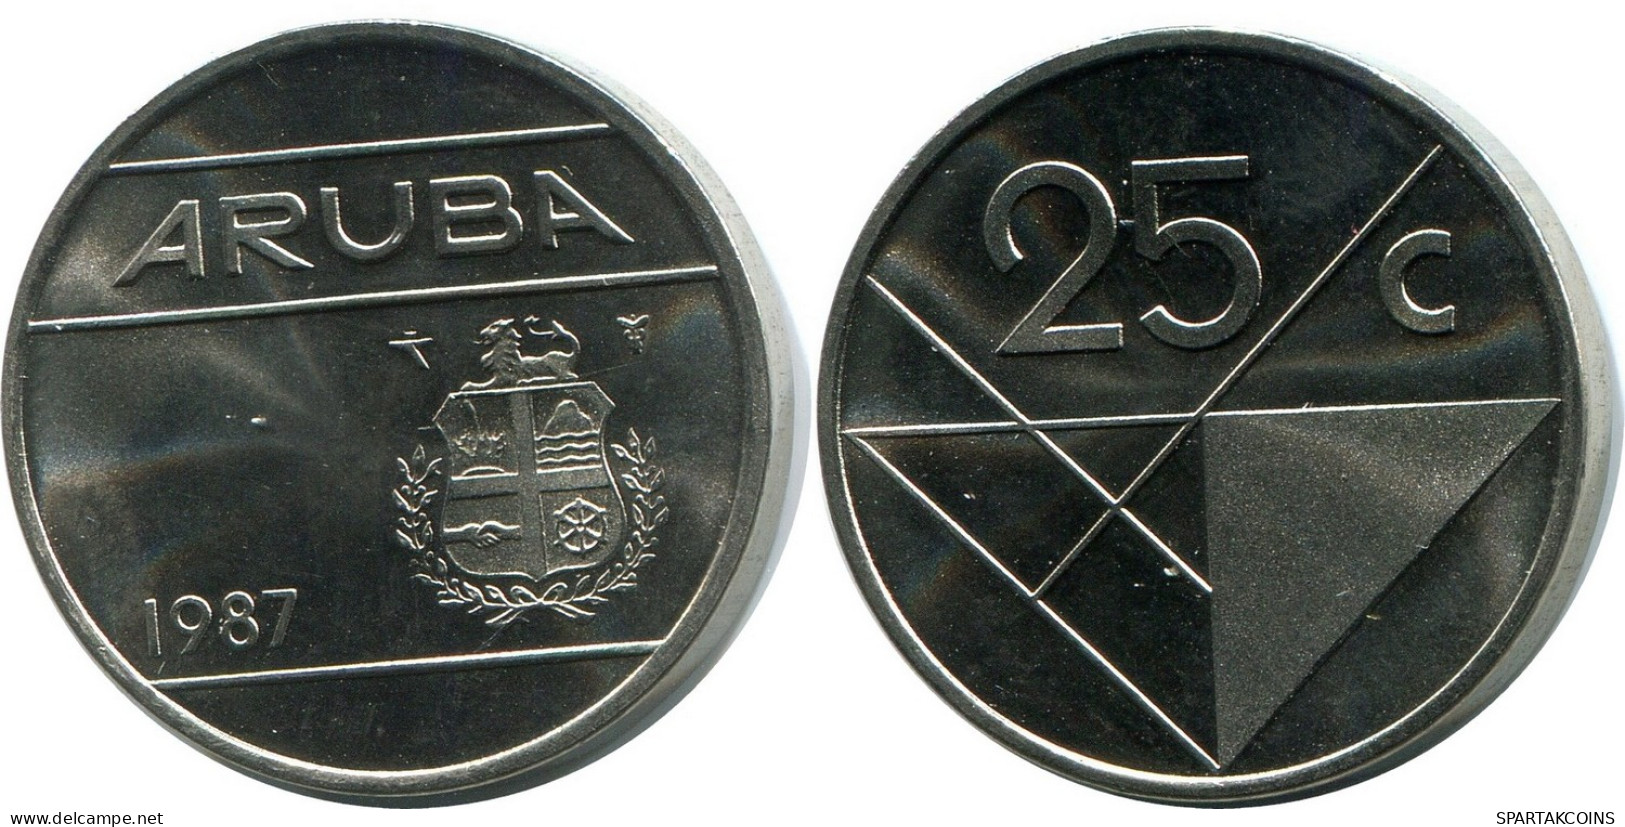 25 CENTS 1987 ARUBA Coin (From BU Mint Set) #AH067.U - Aruba